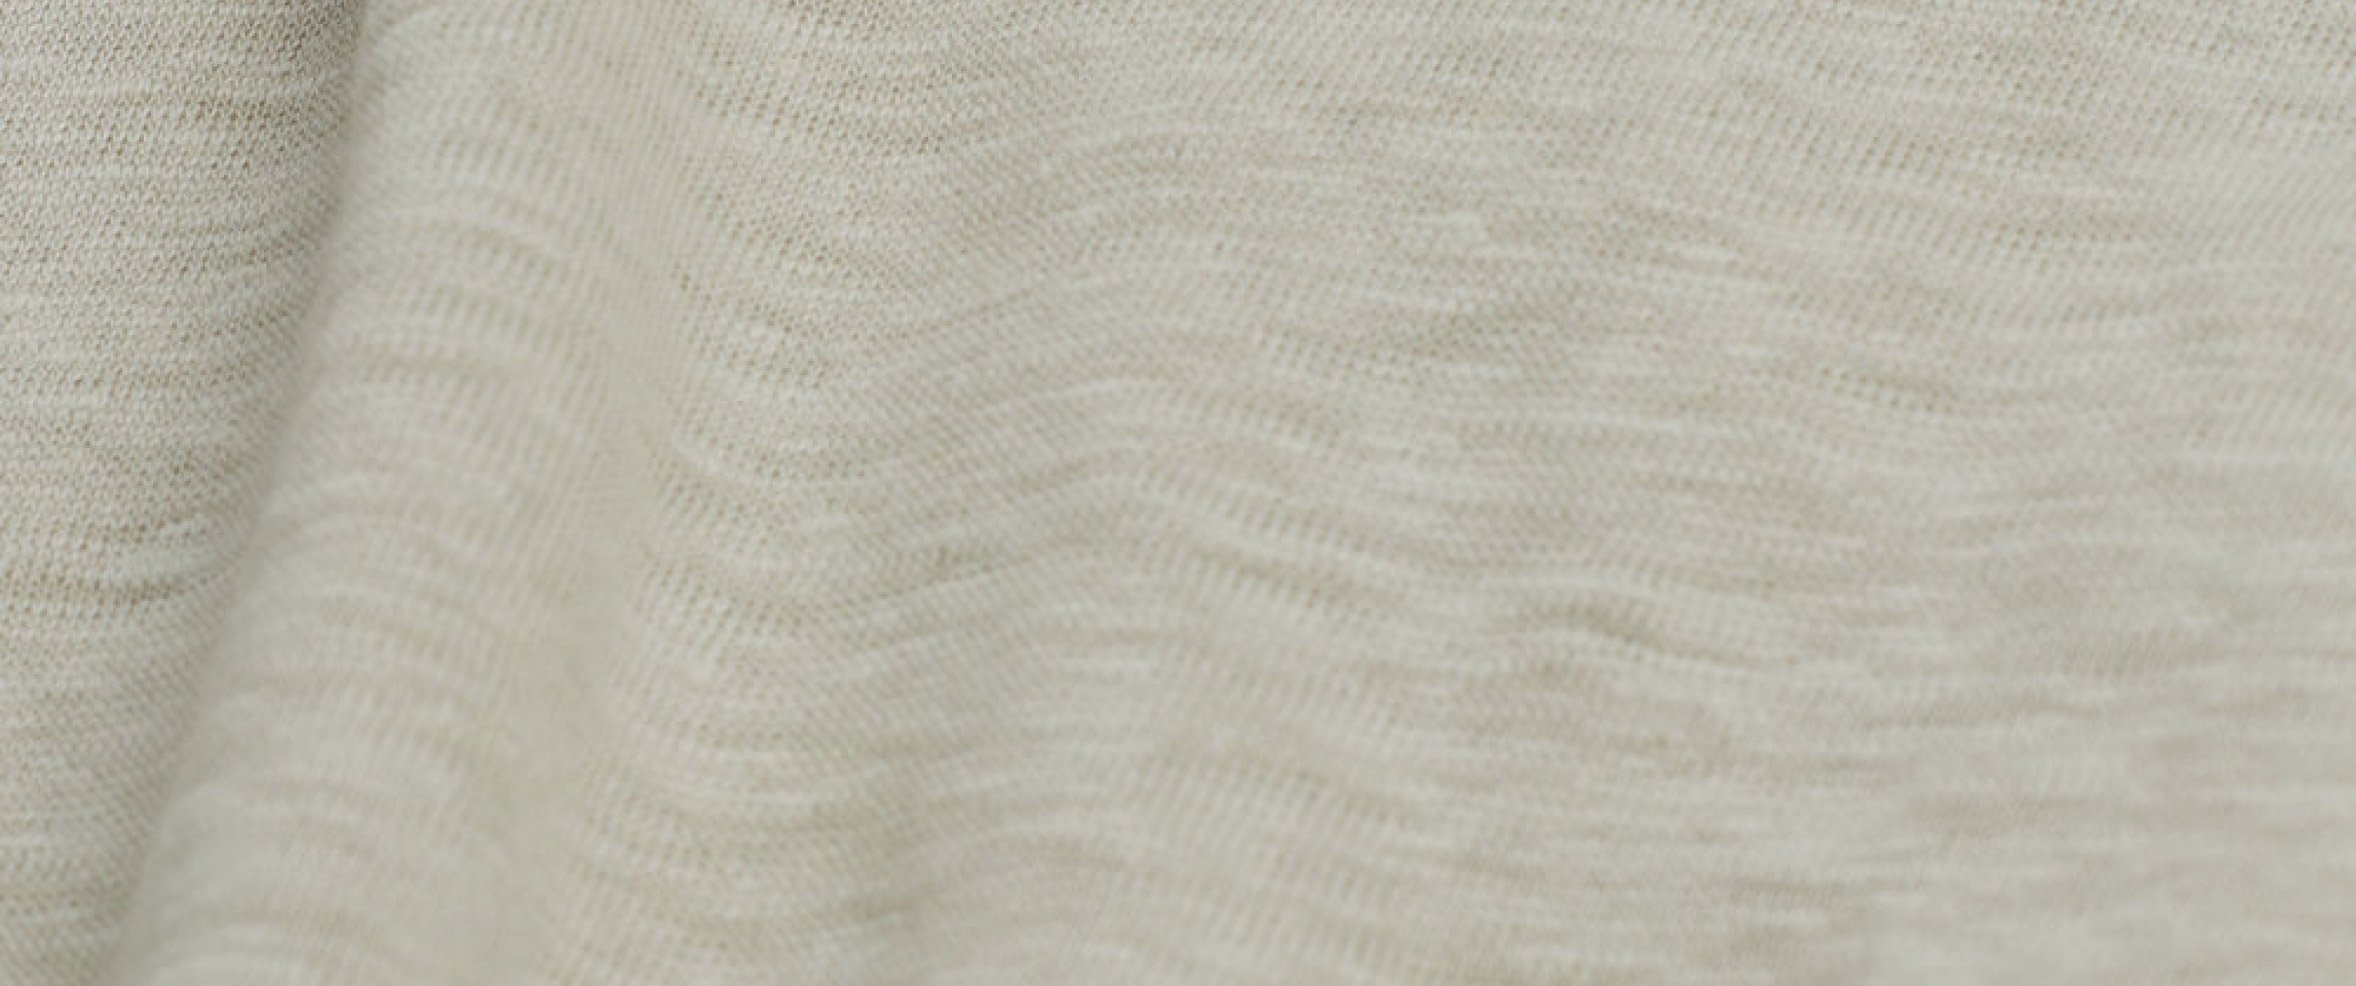 textile-banner-image